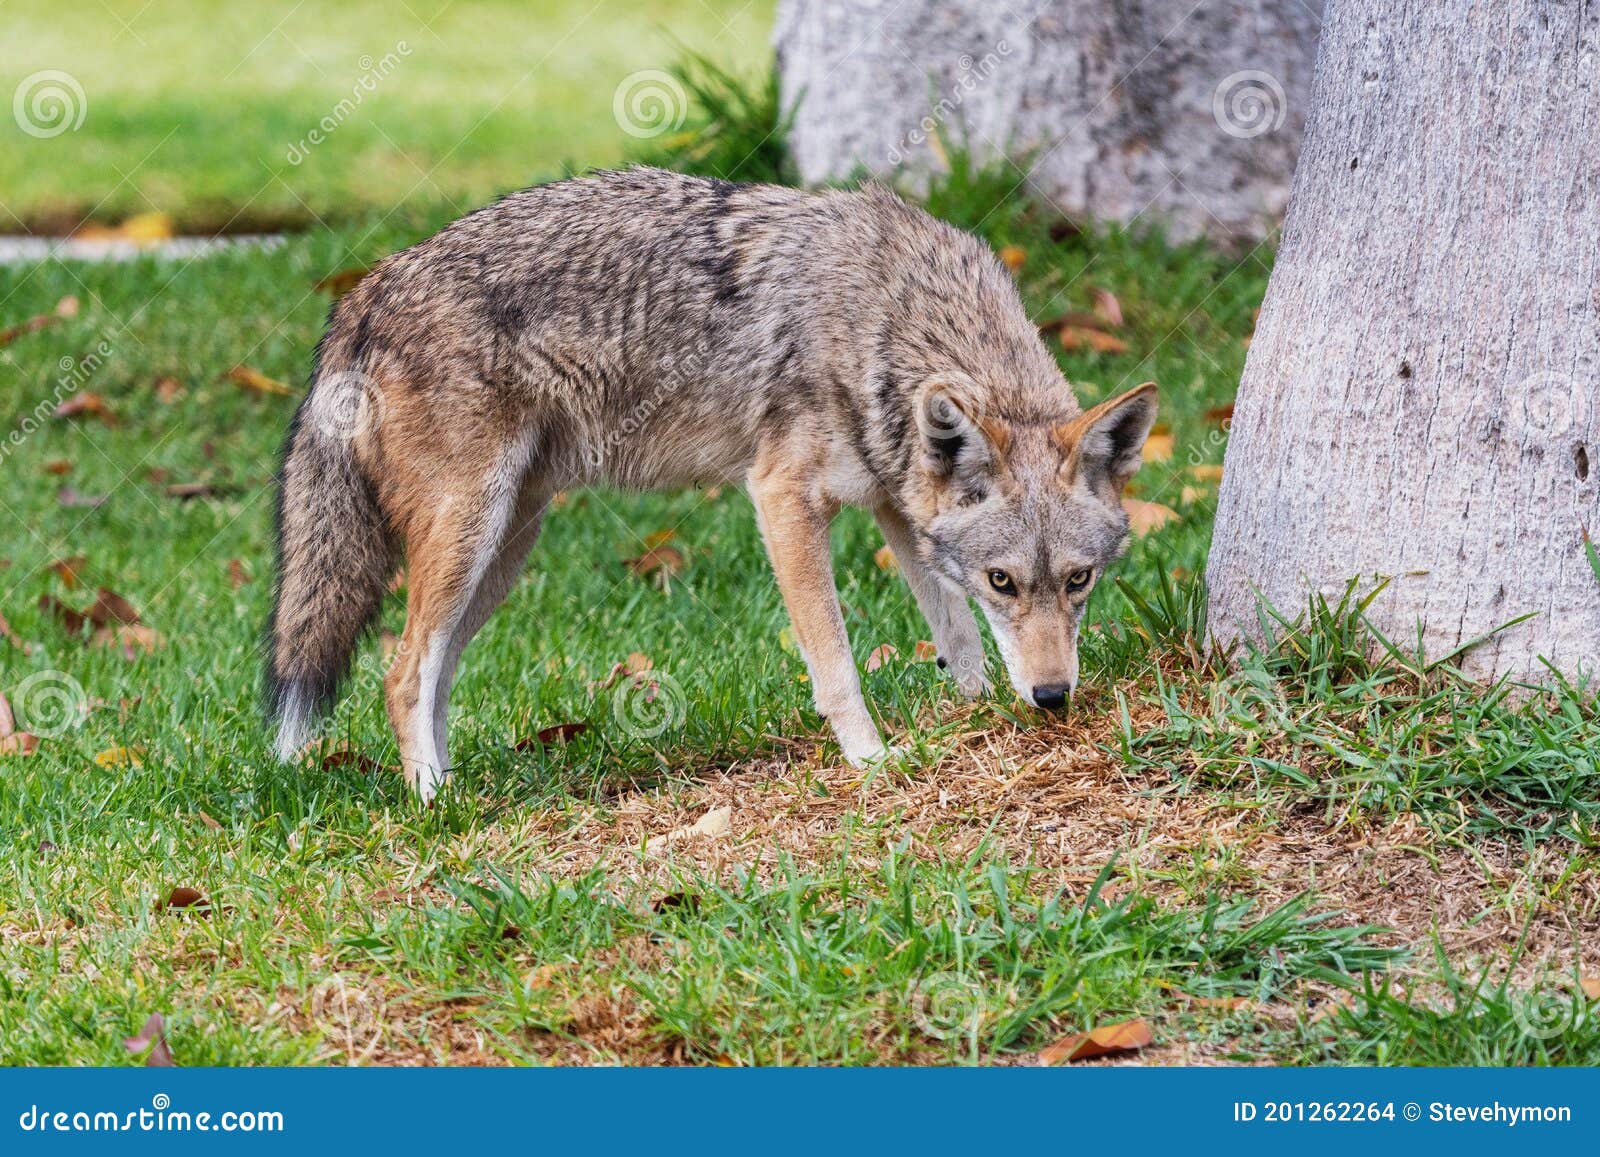 coyote on suburban lawn